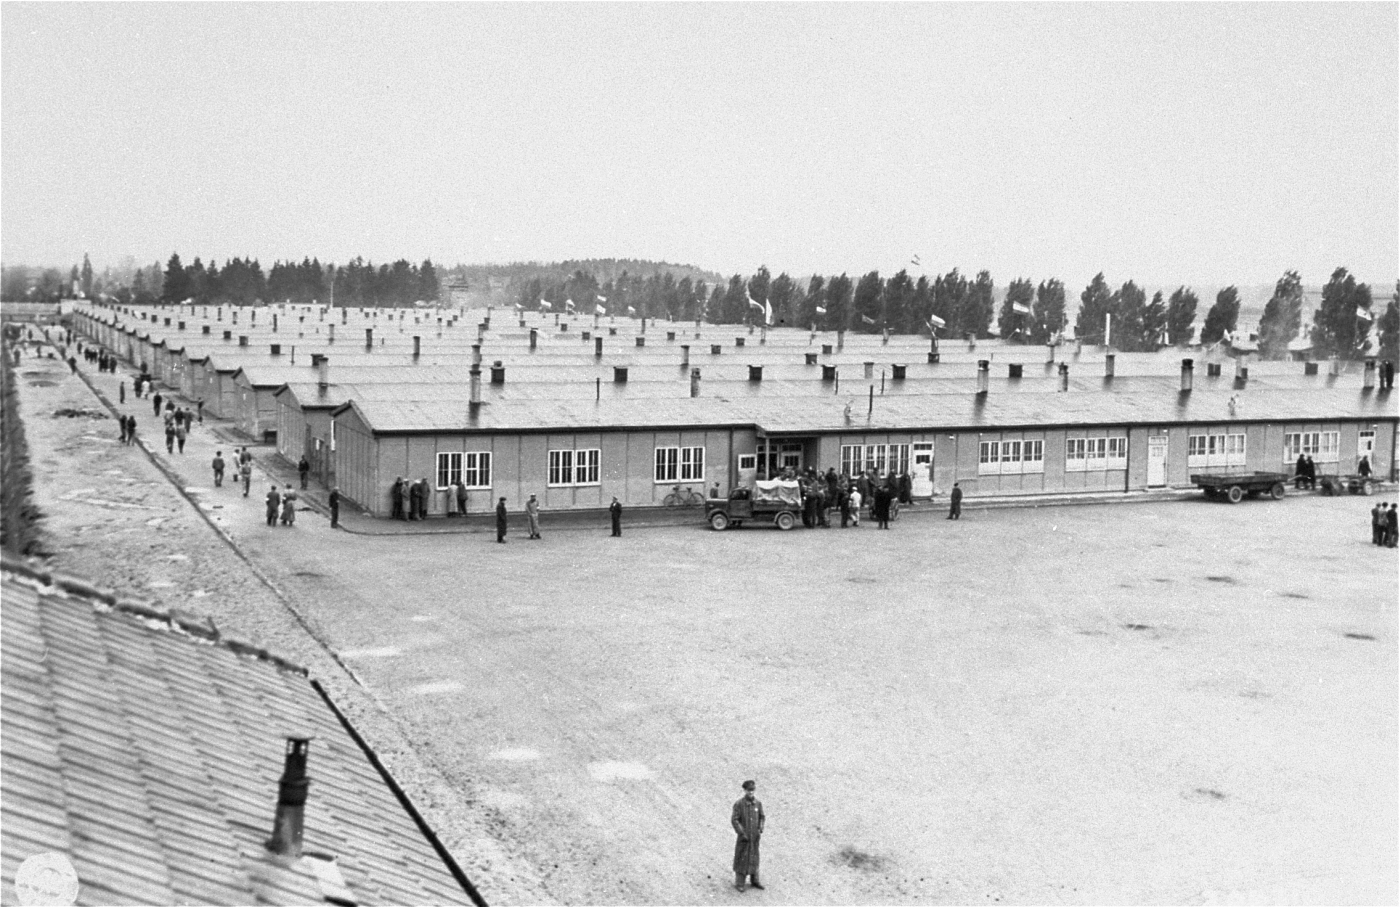 Prisoners' barracks at Dachau